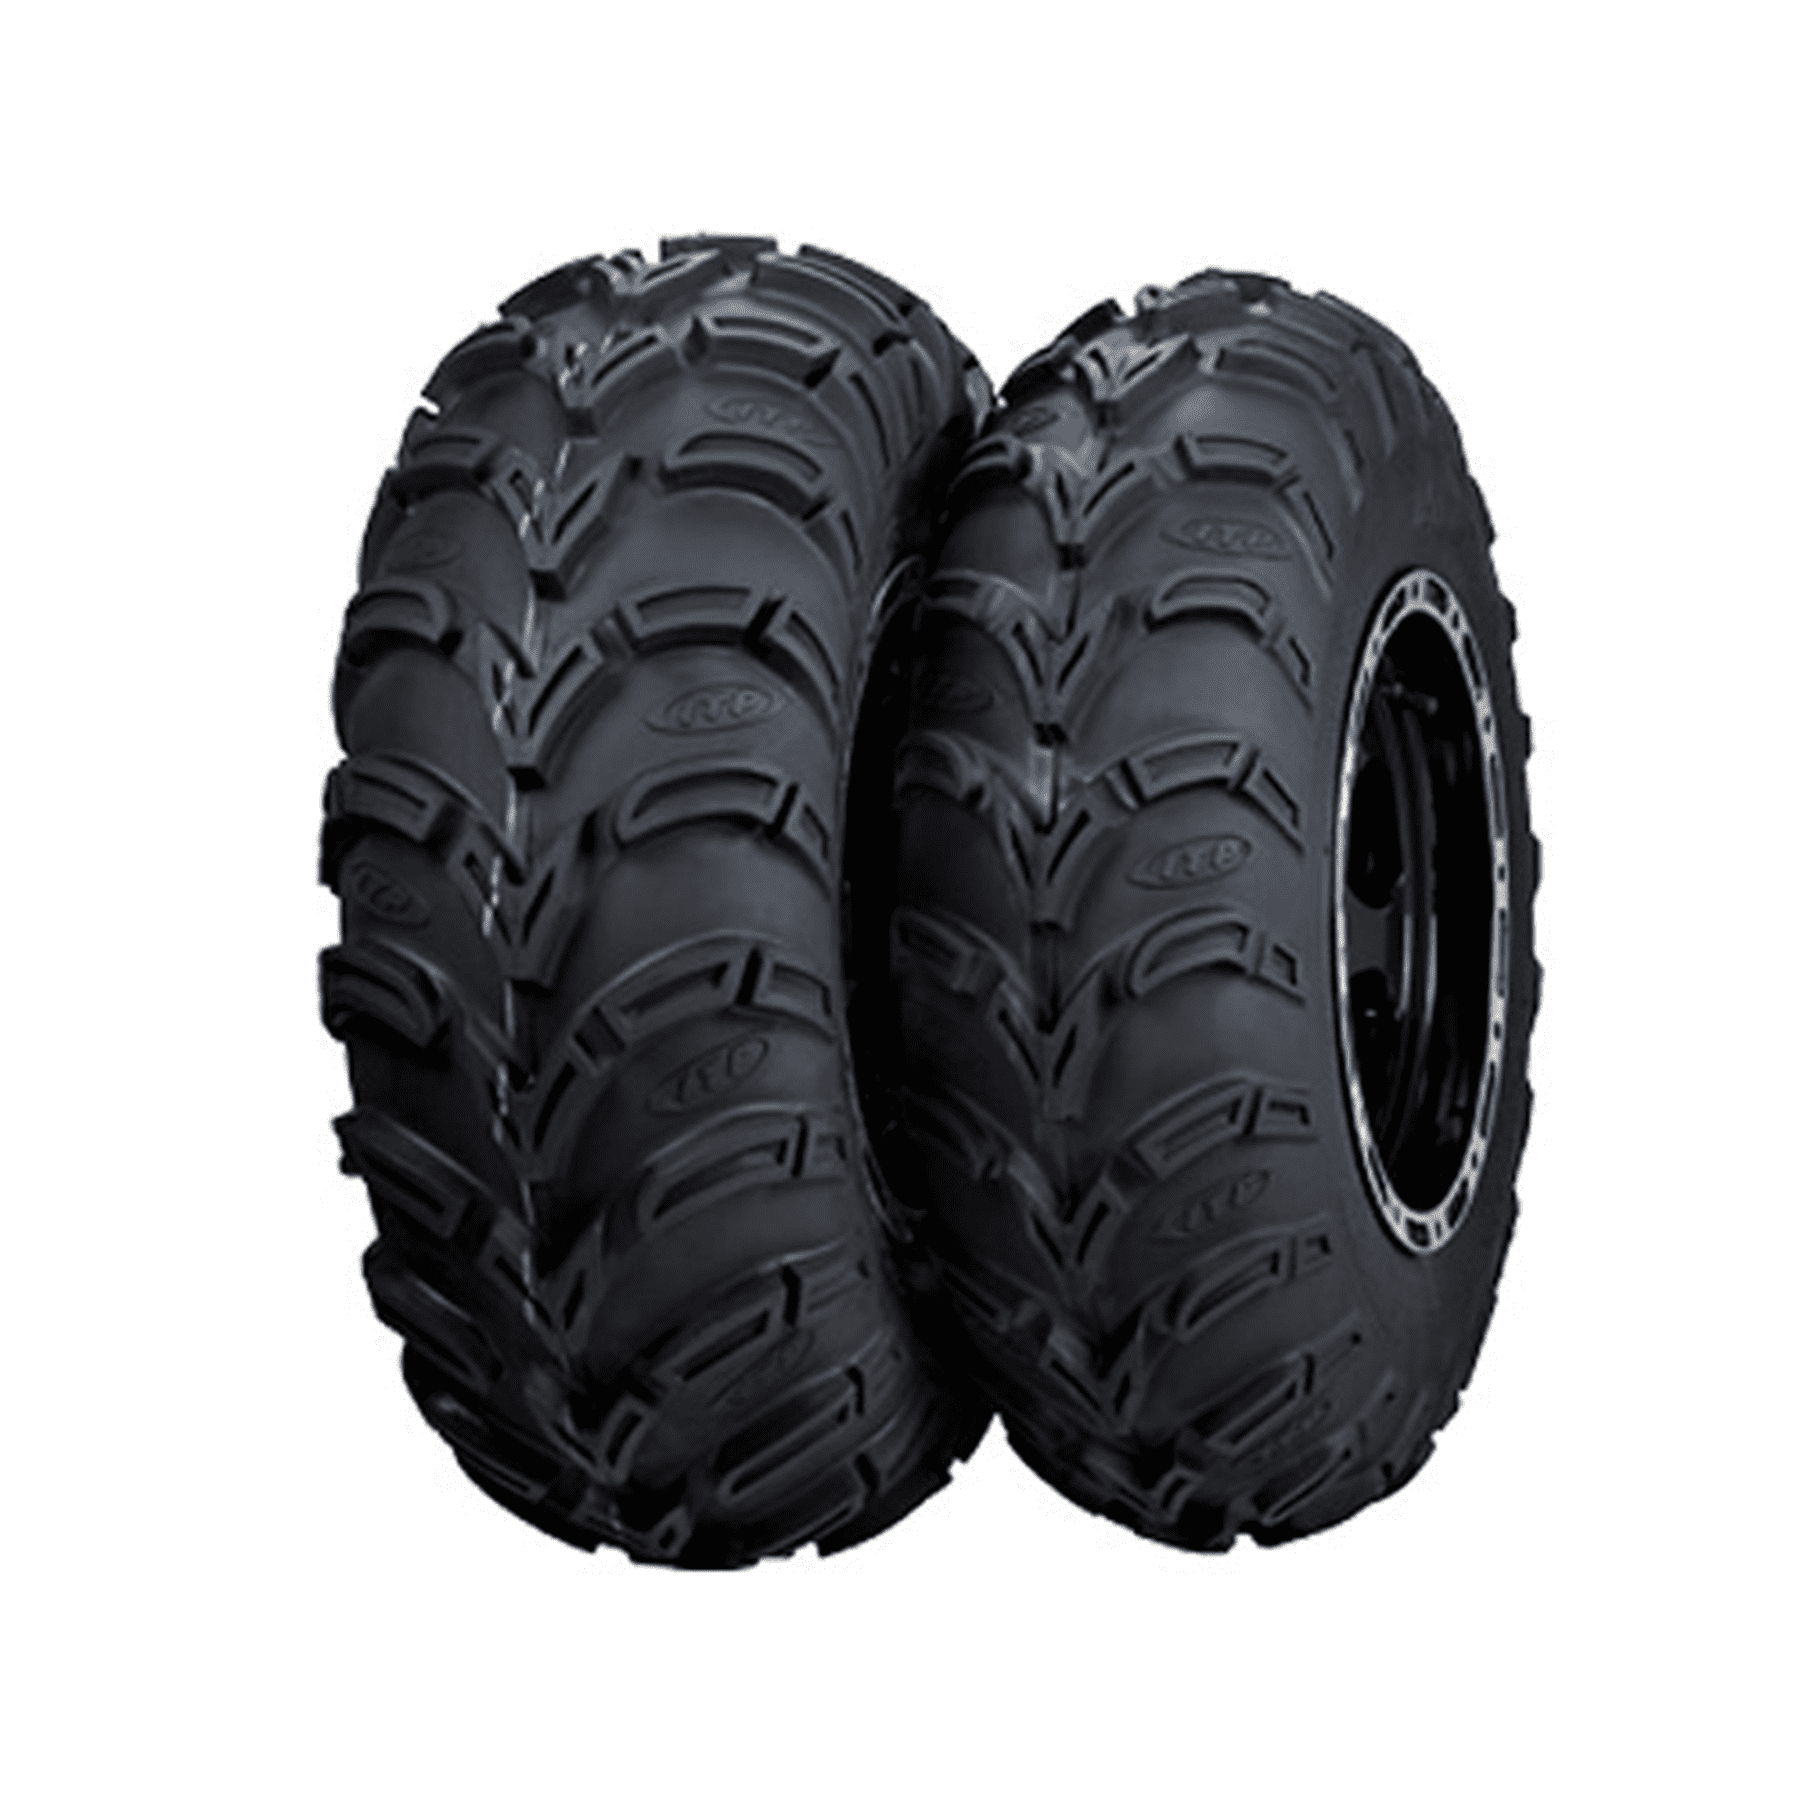 Pair of ITP Mud Lite XL 2 6ply ATV Tires 25x12-11 